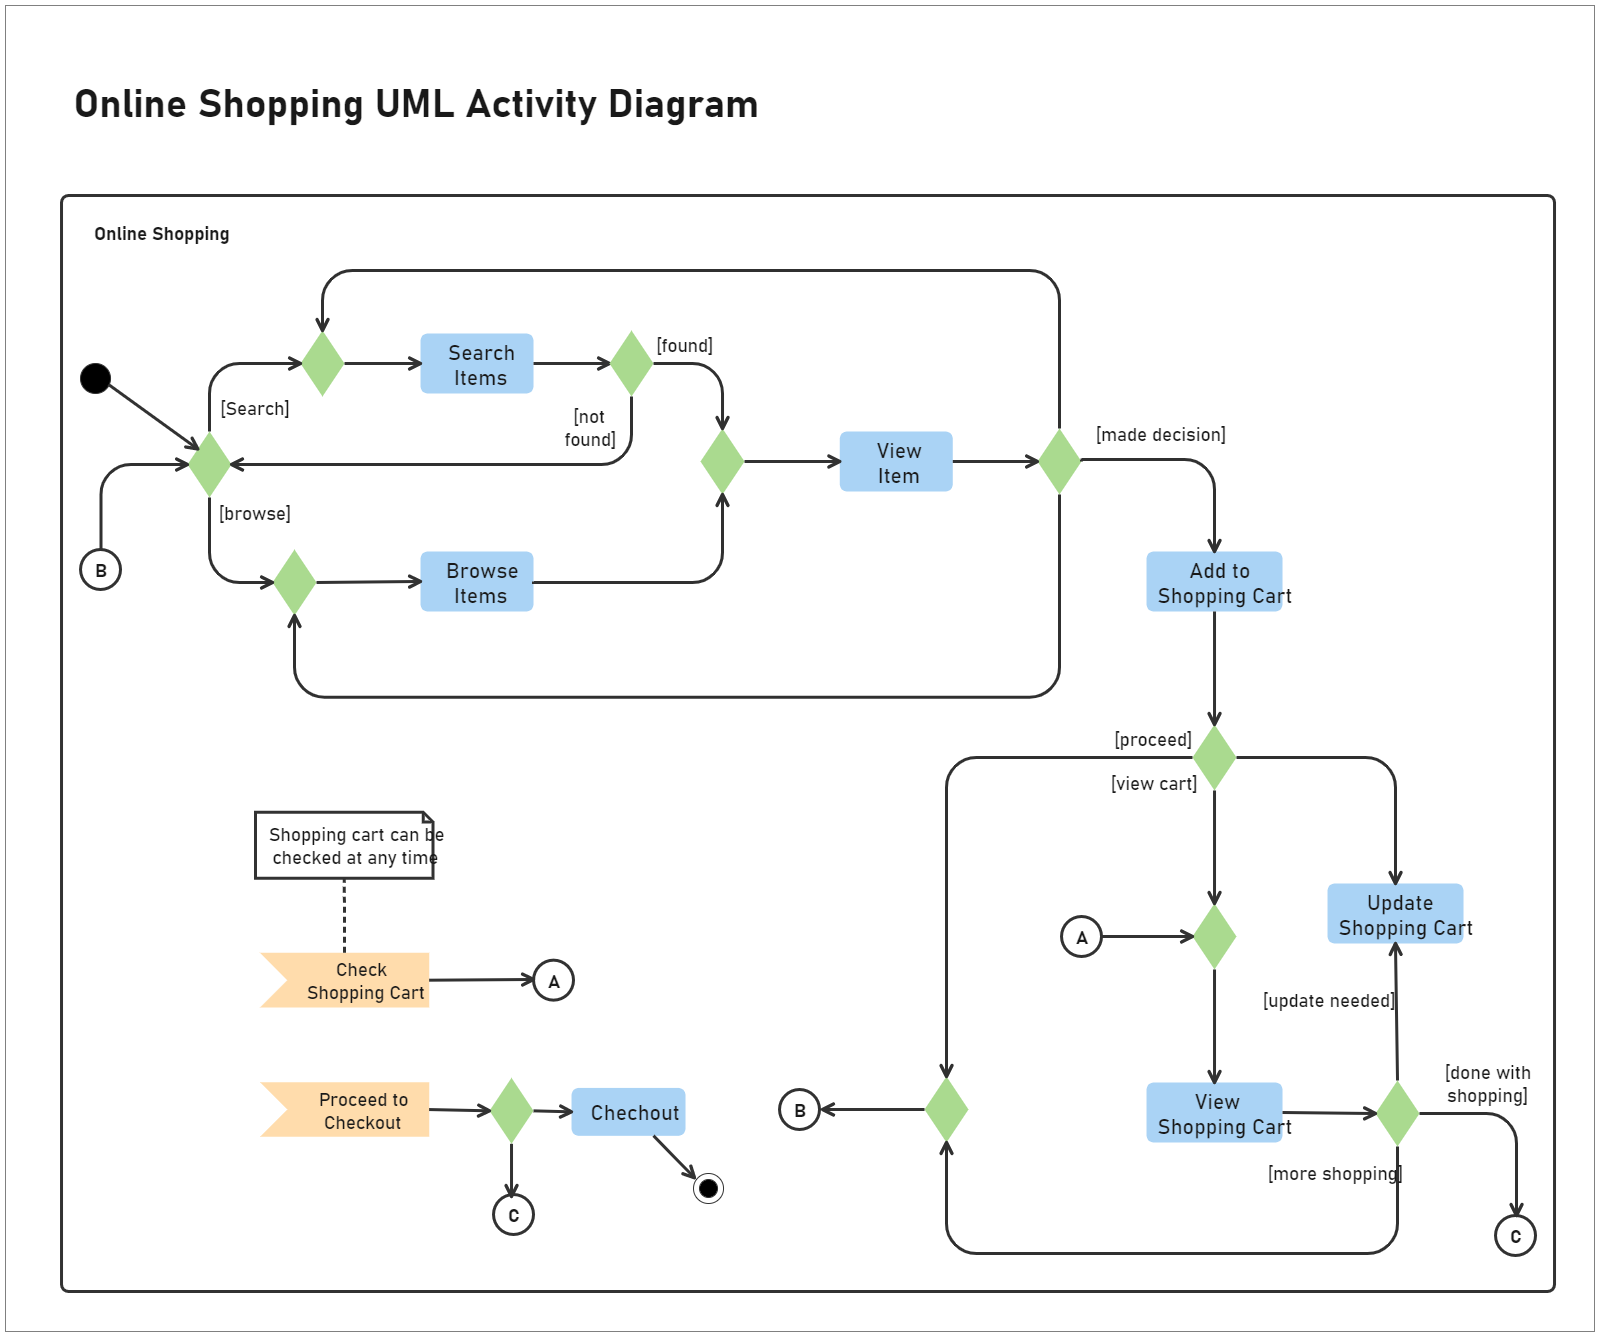 Online Shopping UML Activity Diagram